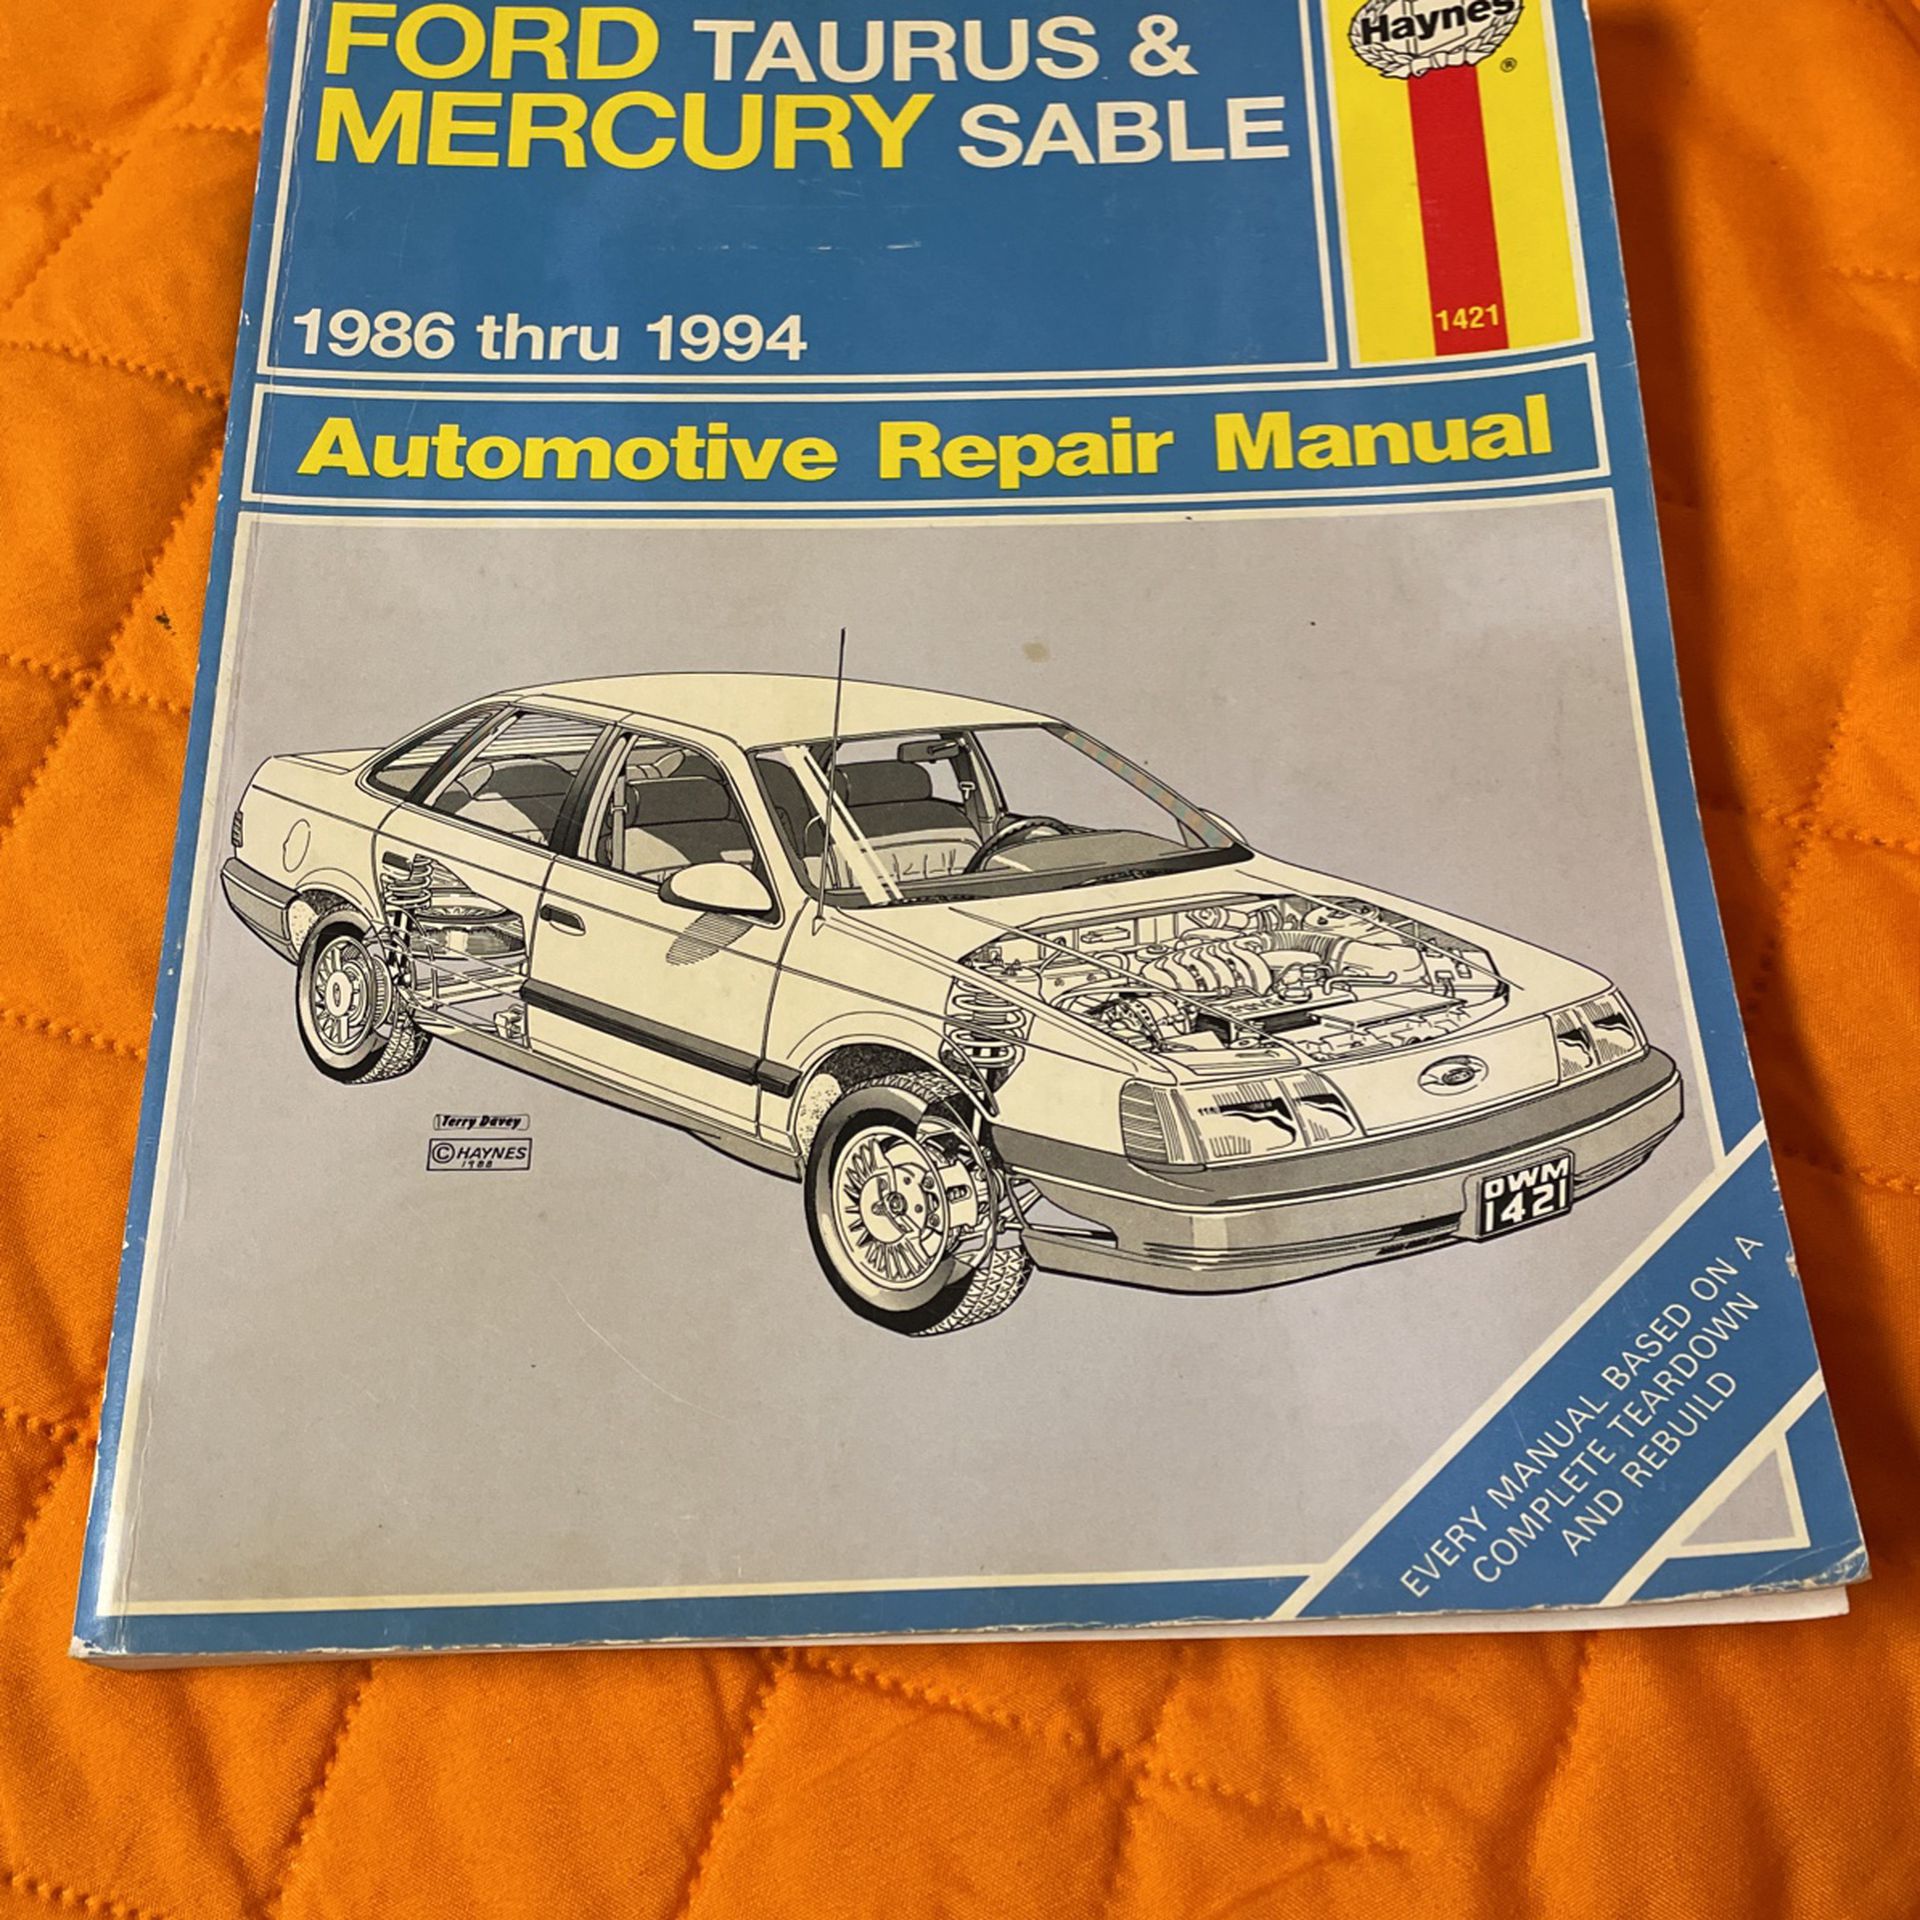 Hanes Ford Taurus in mercury sable 1986 through 1994